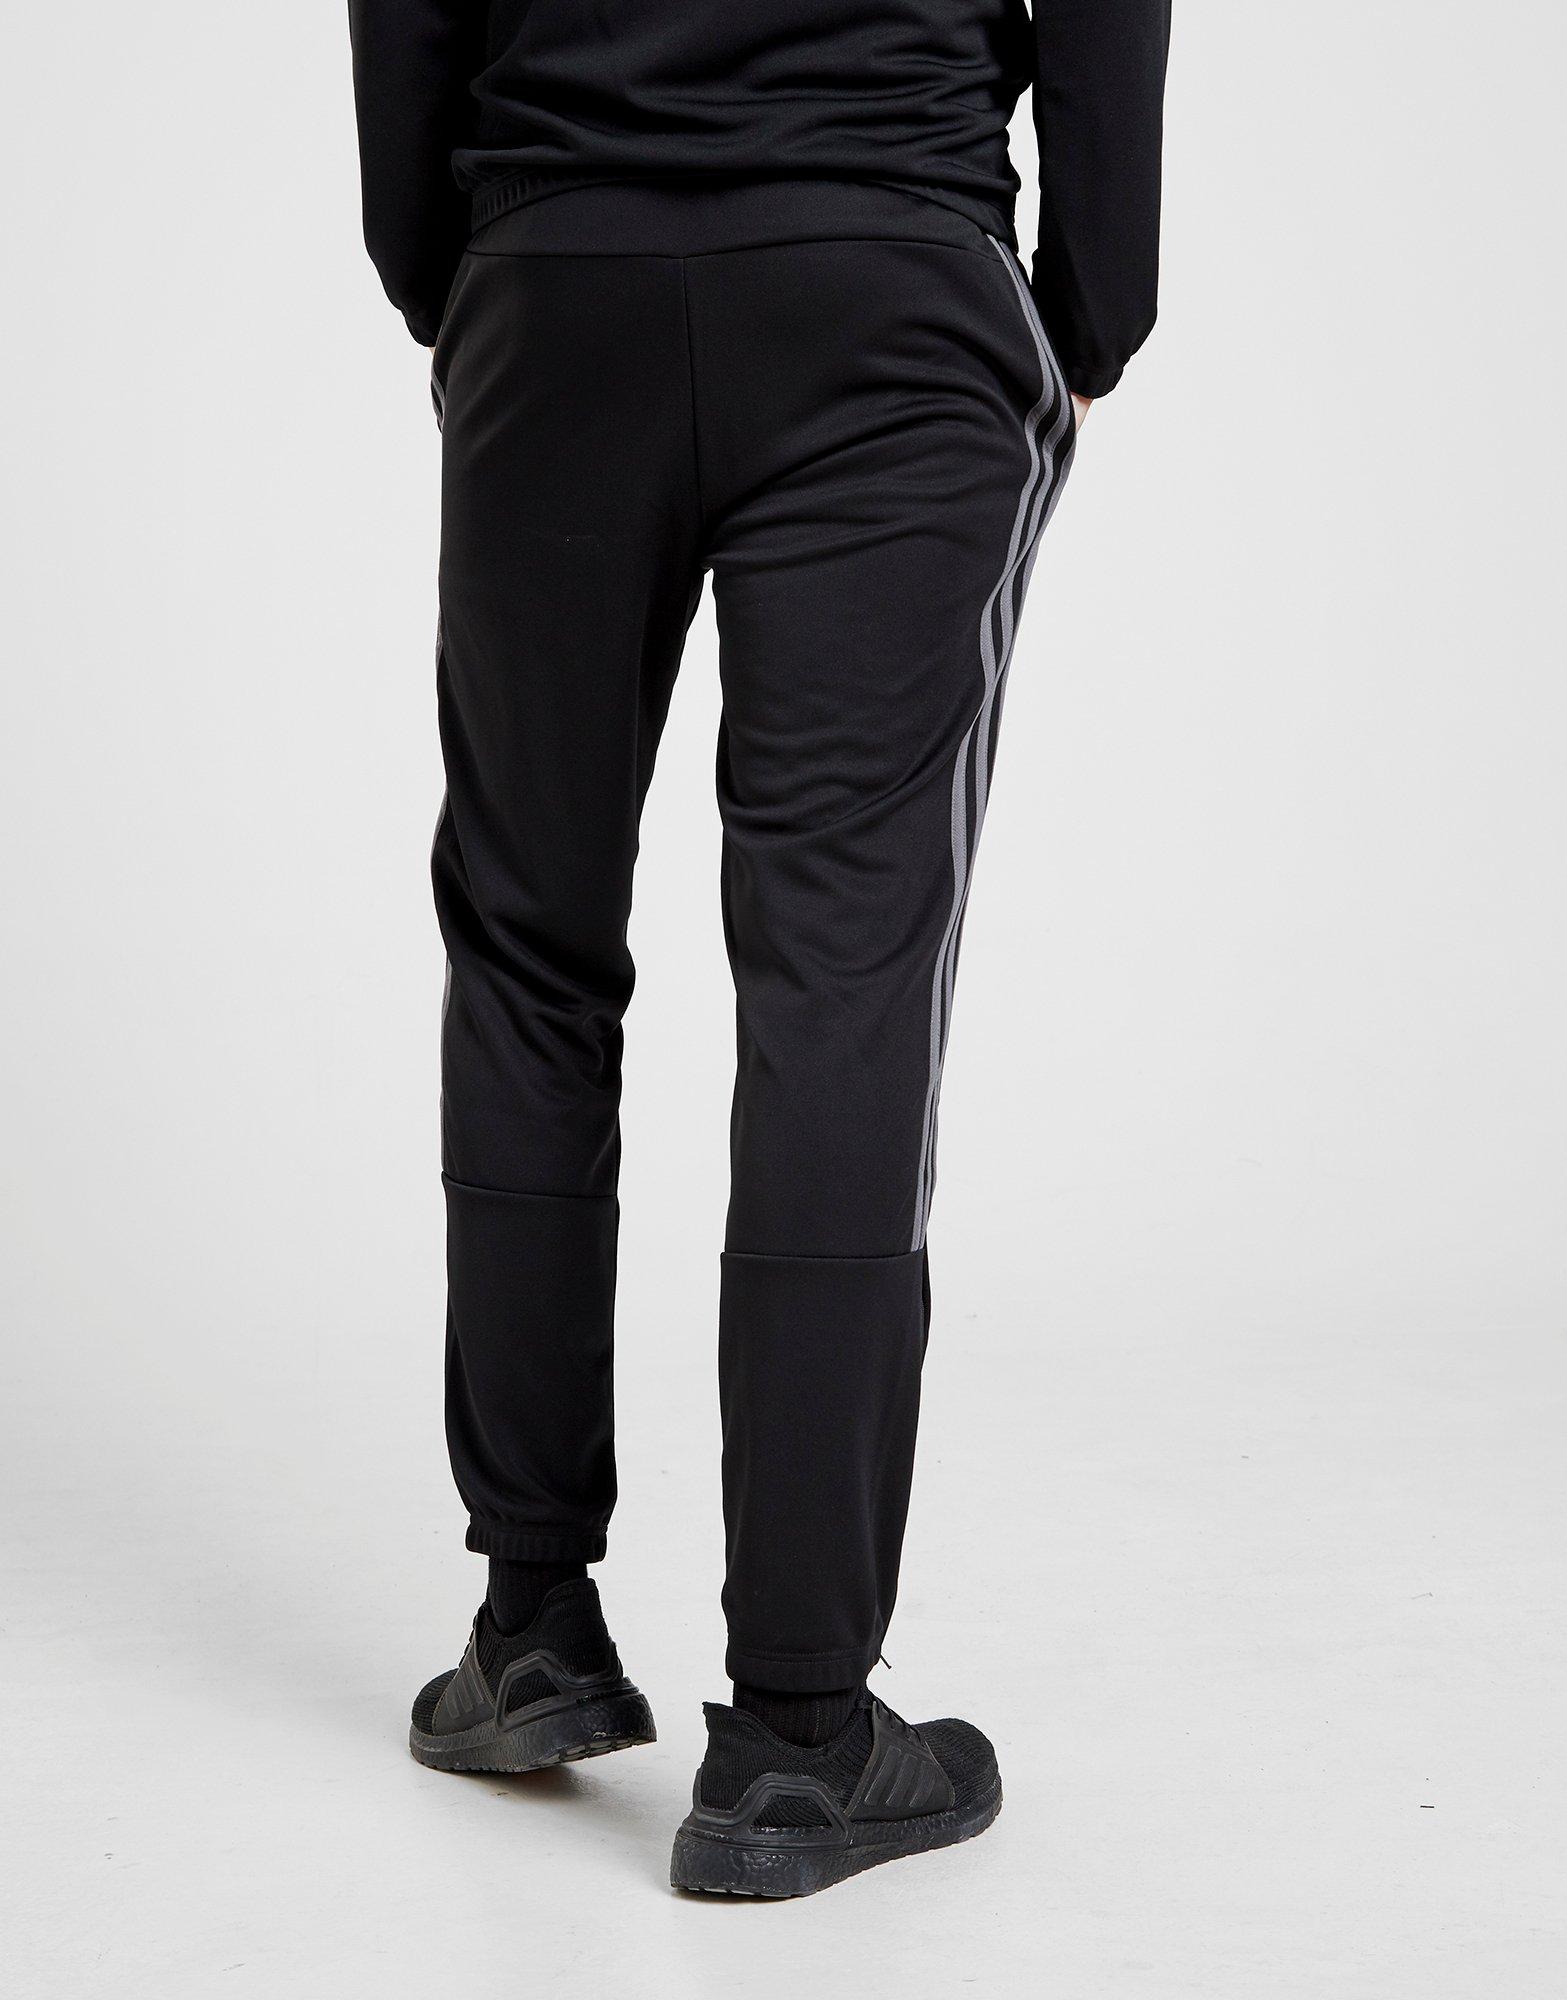 black adidas pants with grey stripes